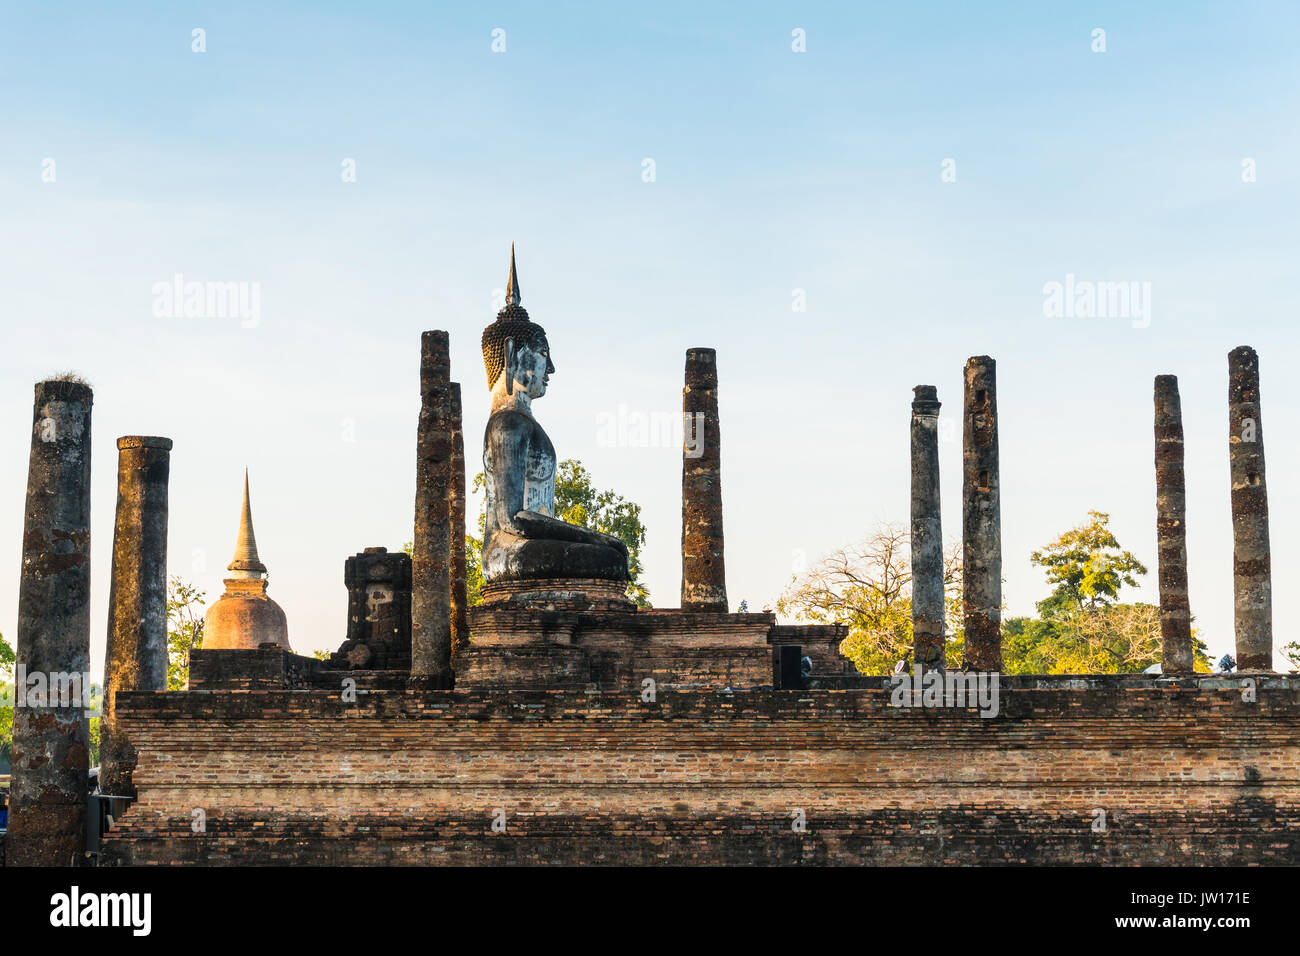 Buddha statue at wat mahathat temple in sukhothai historical park thailand Stock Photo